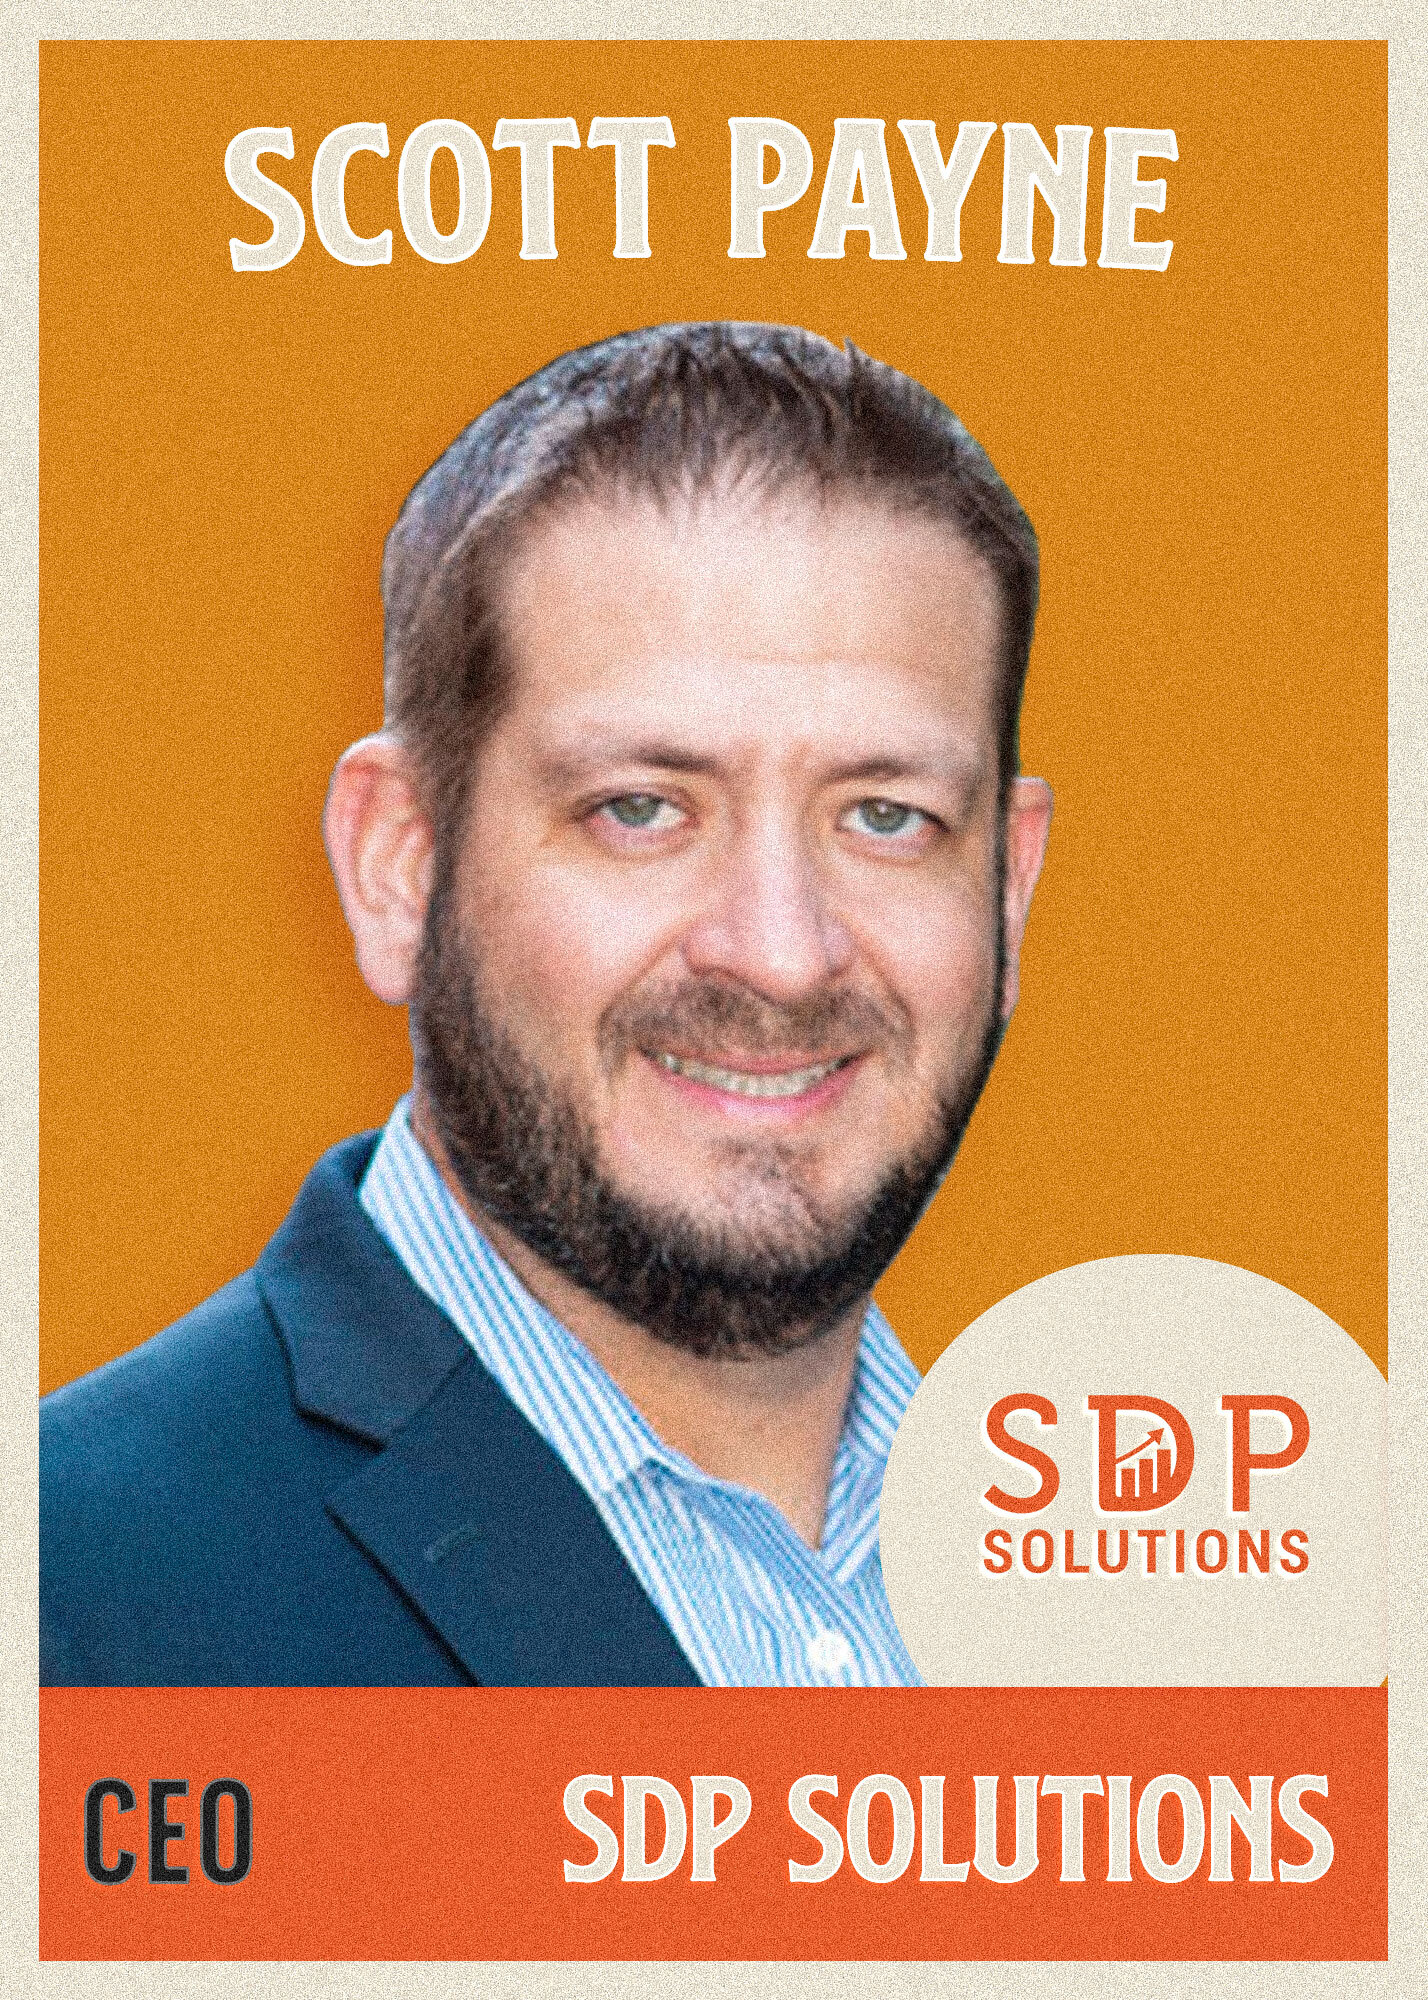 Scott Payne, CEO of SDP Solutions